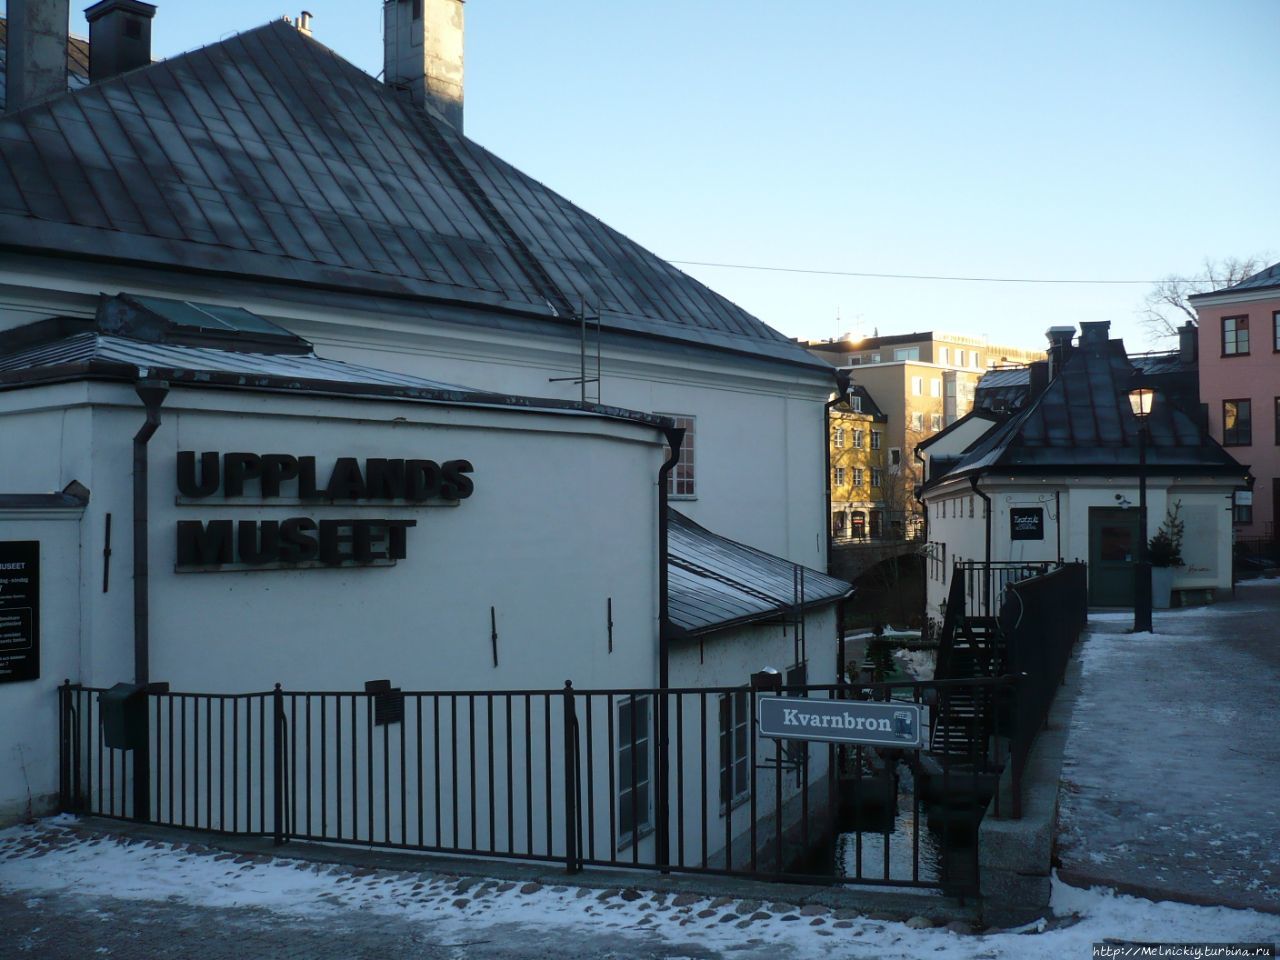 Музей провинции Уппланд Уппсала, Швеция